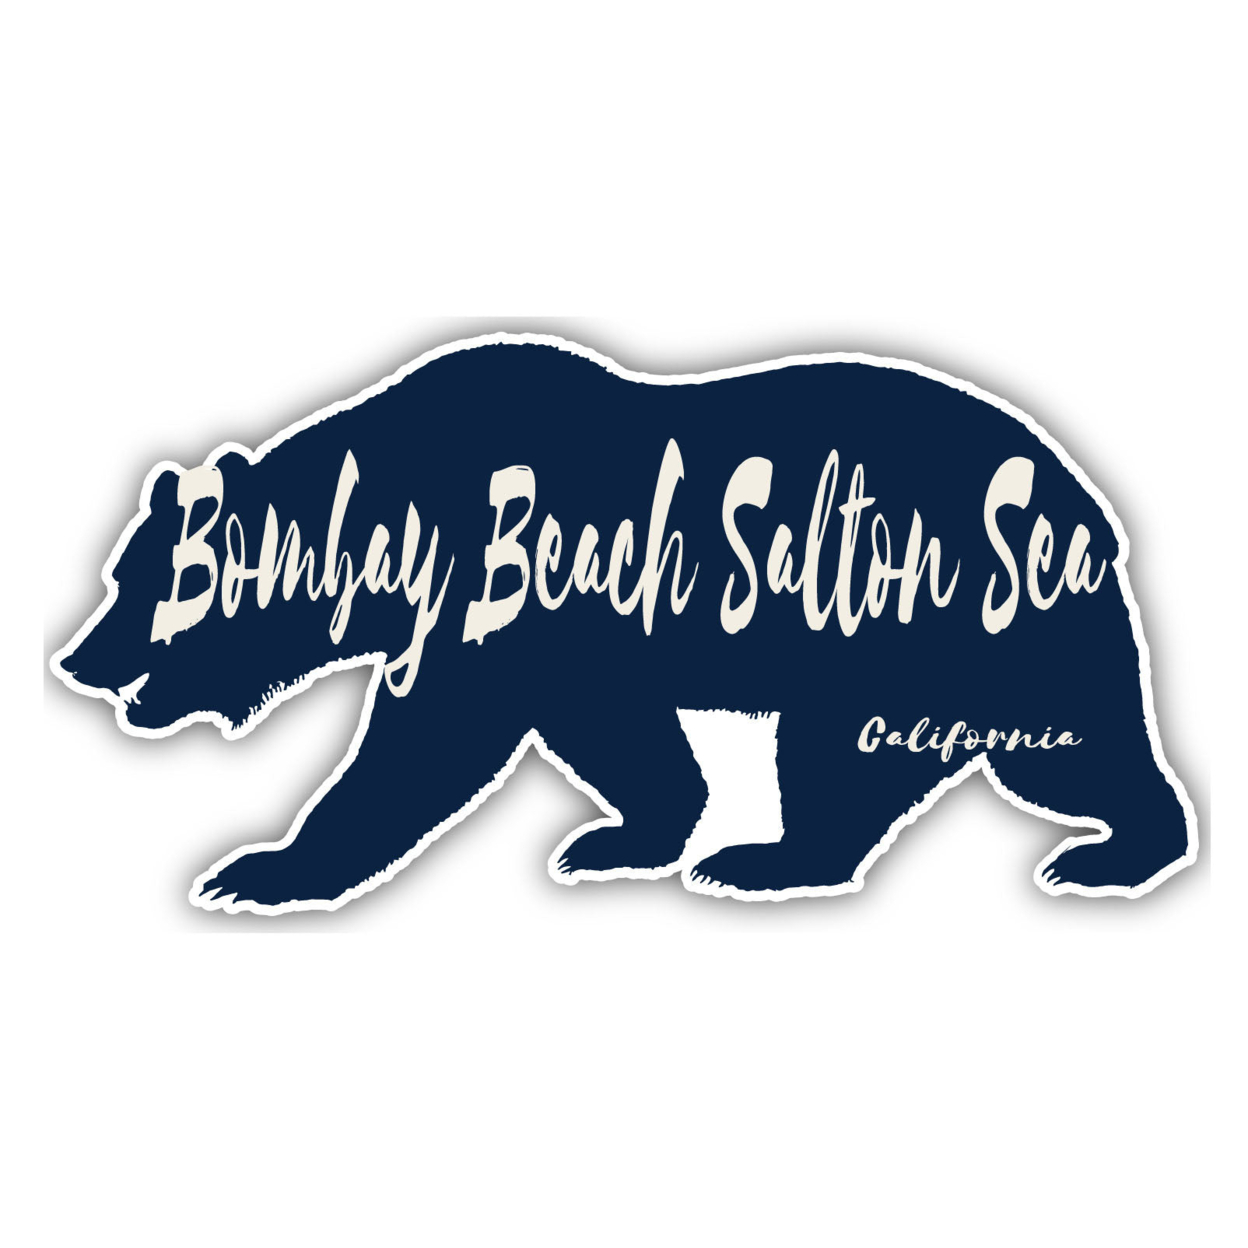 Bombay Beach Salton Sea California Souvenir Decorative Stickers (Choose Theme And Size) - 4-Pack, 6-Inch, Bear